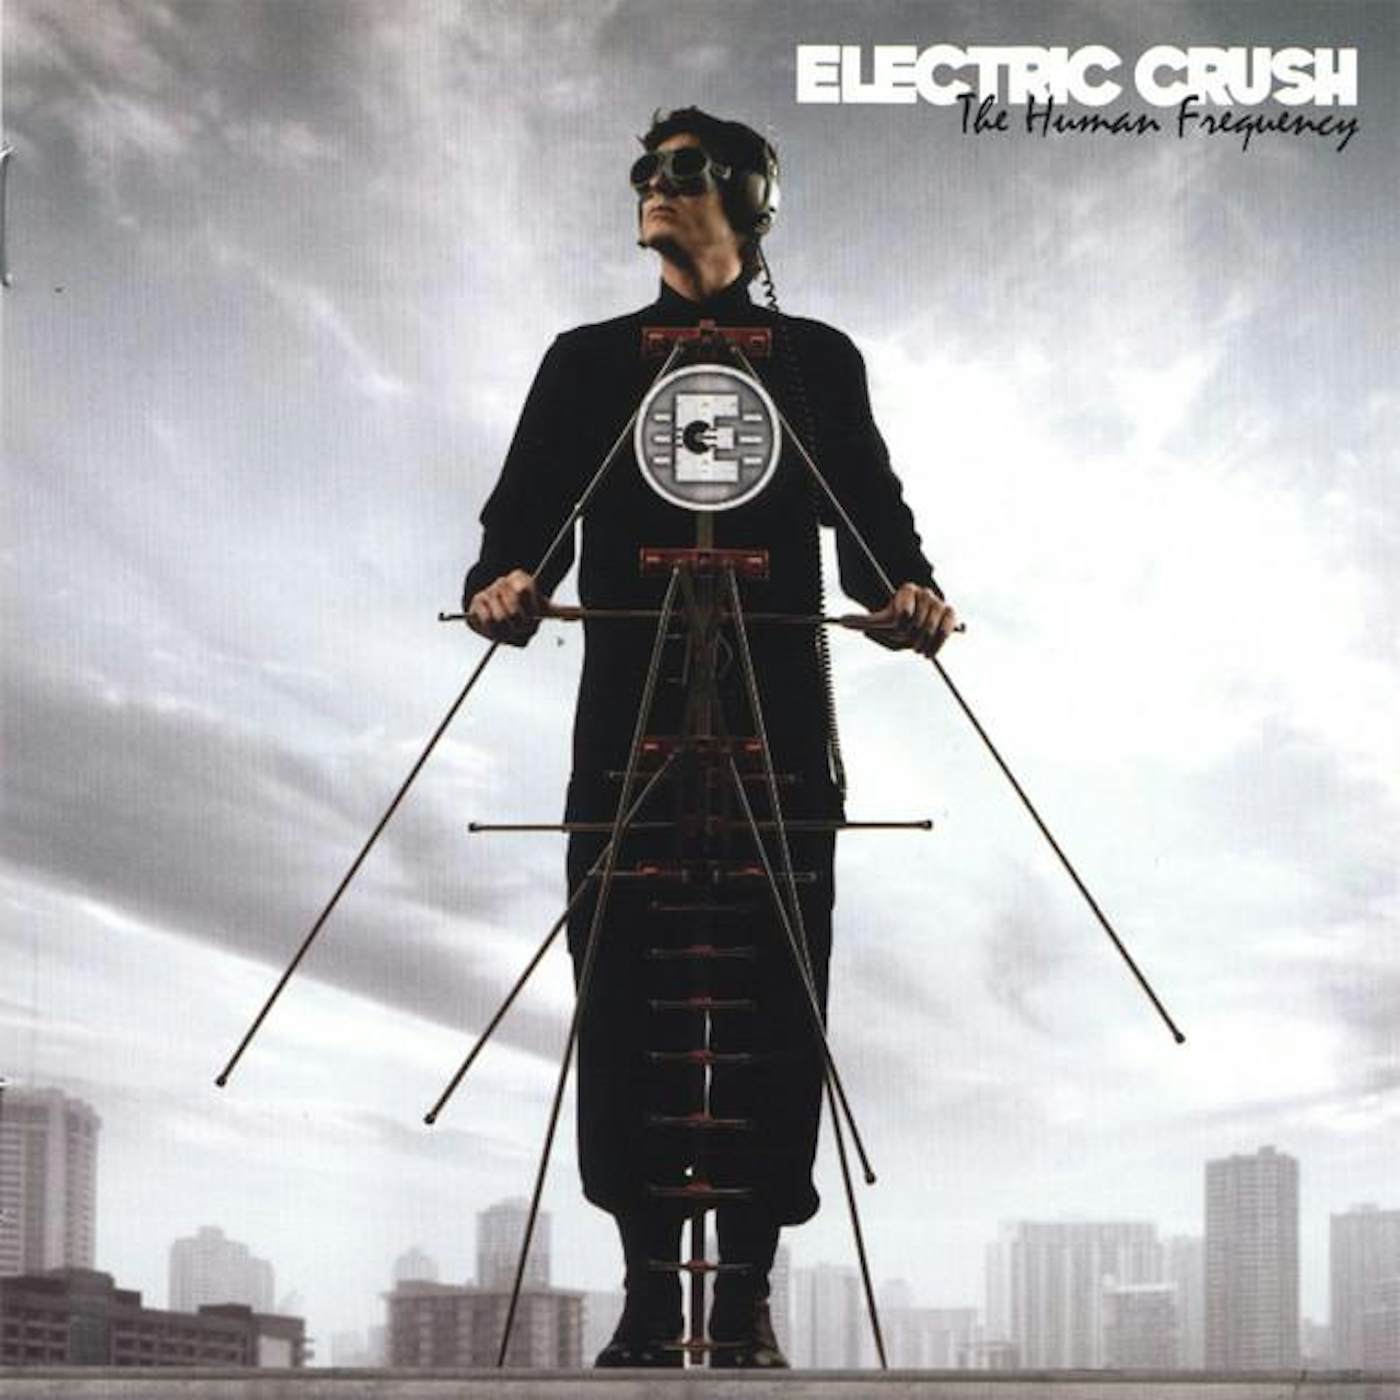 Electric Crush